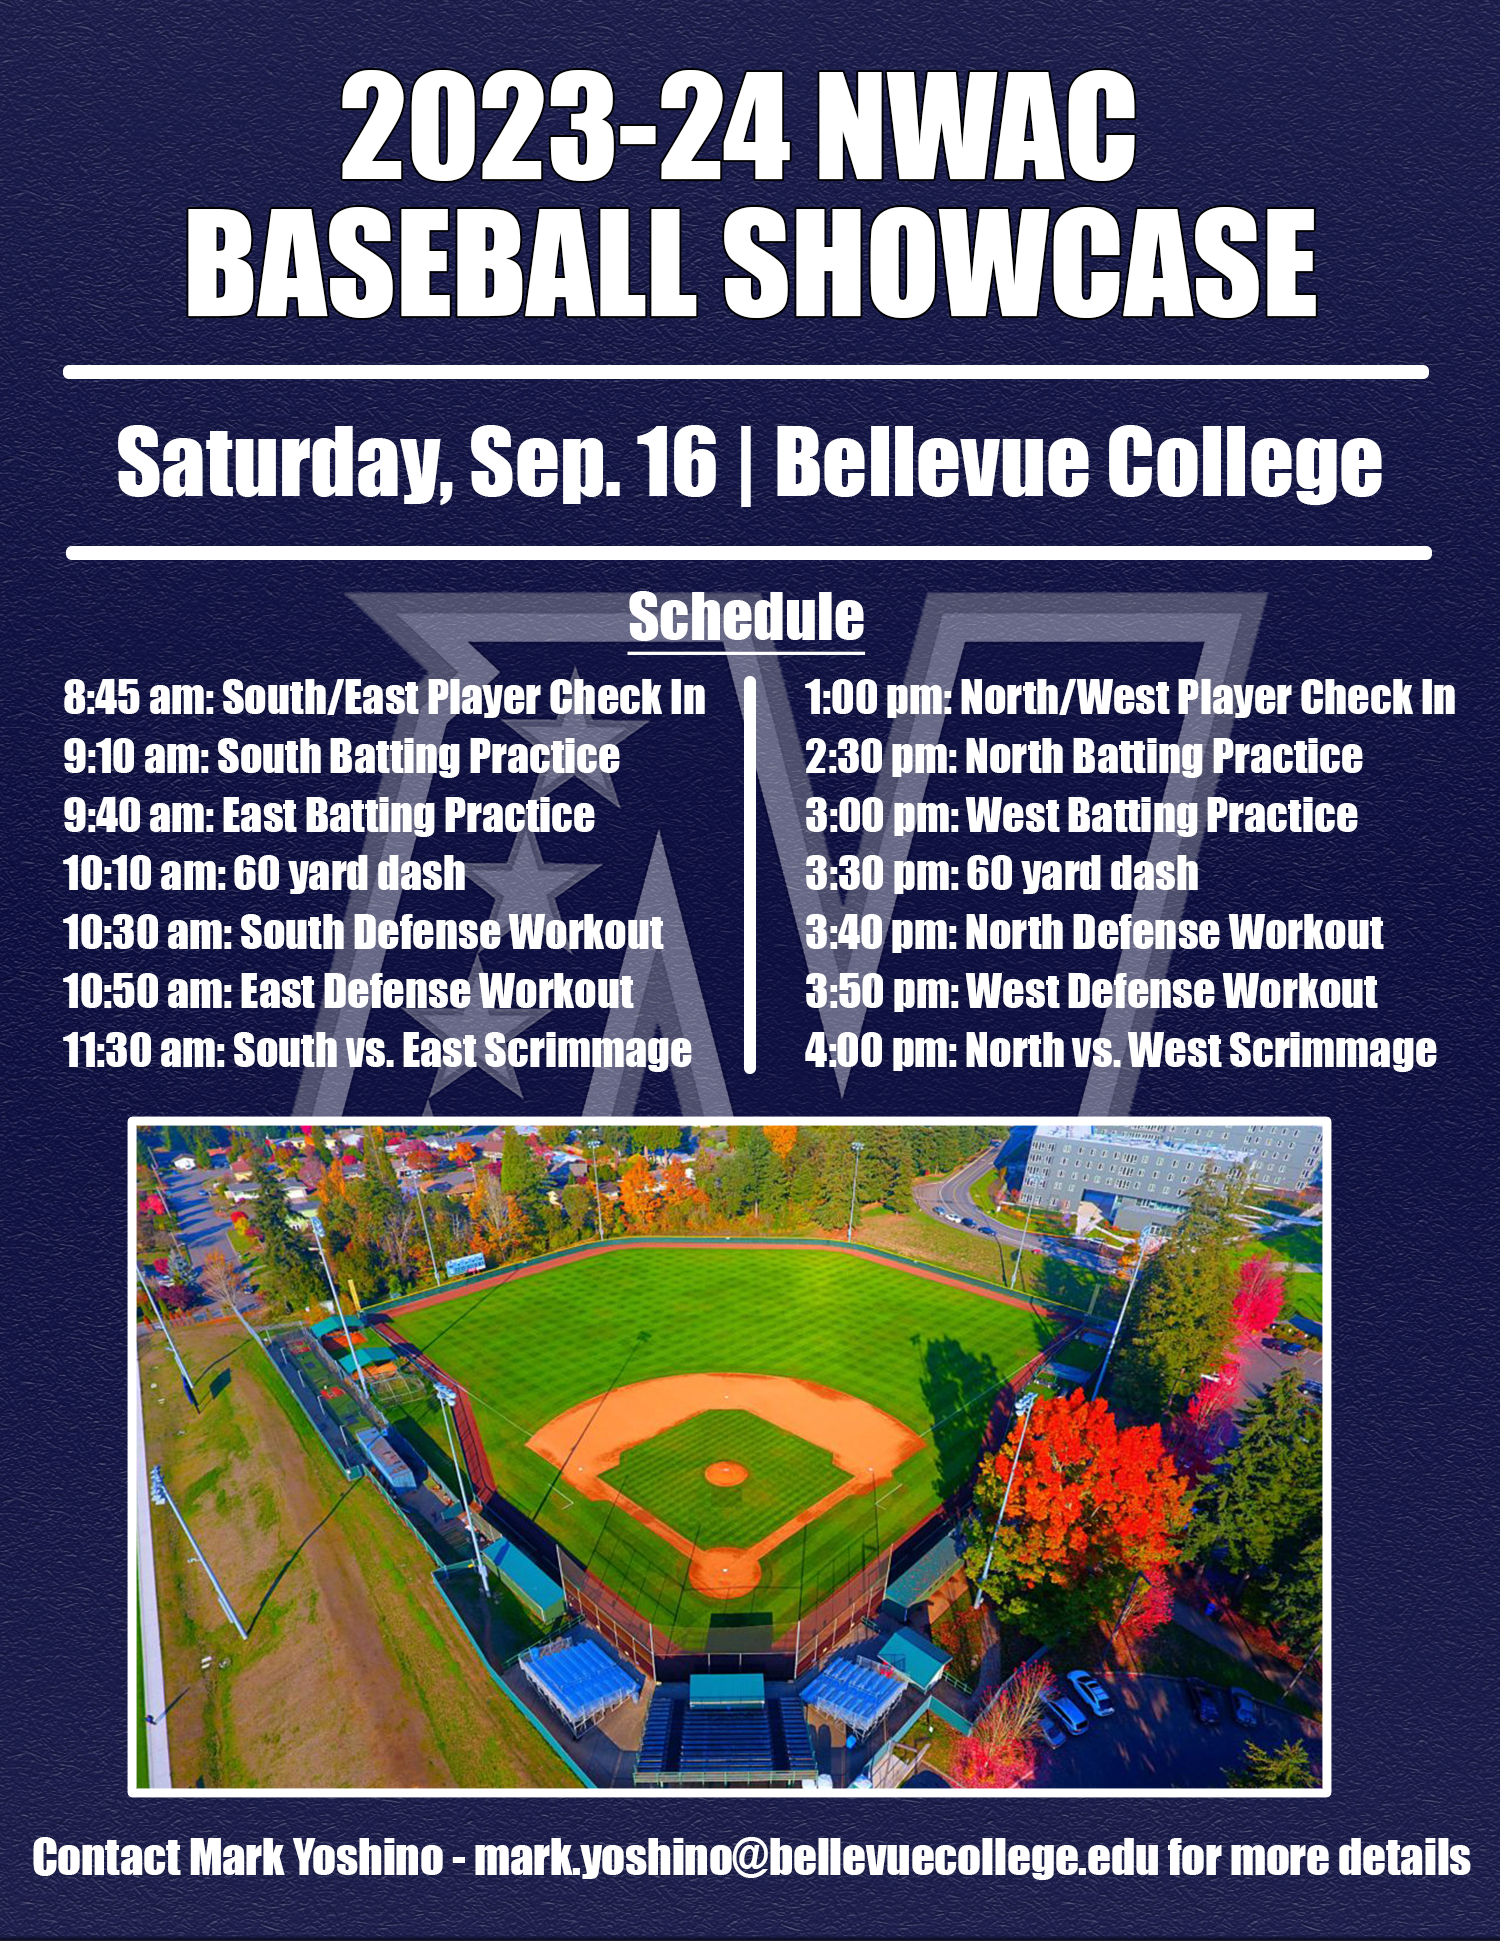 2023-24 NWAC Baseball Showcase at Bellevue College on Sep. 16.